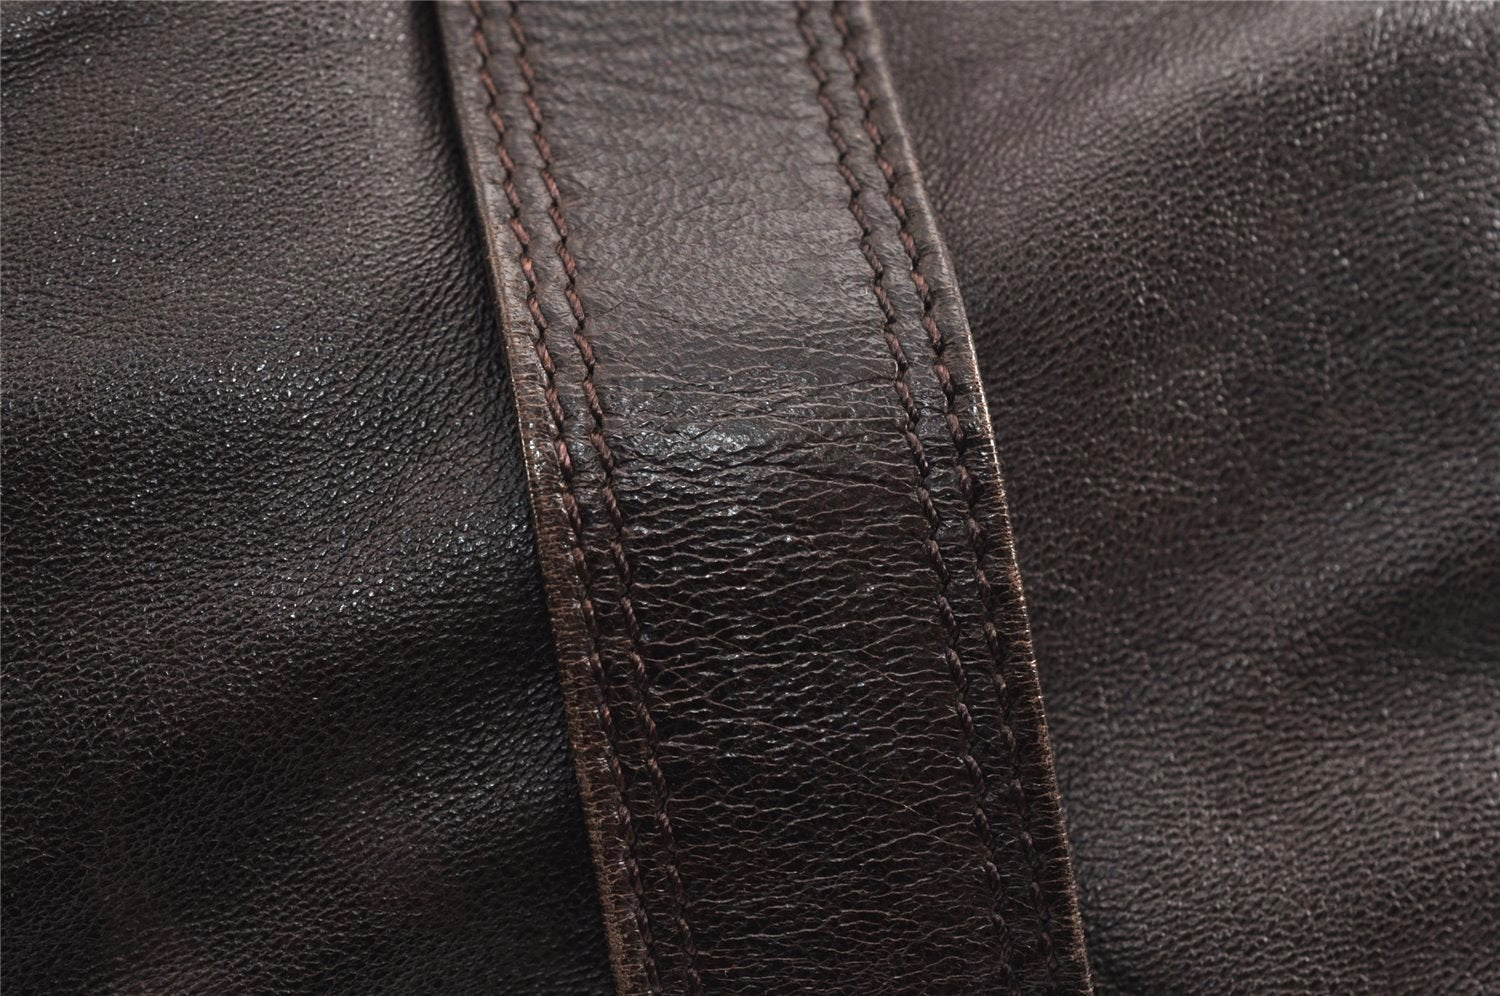 Authentic CELINE Vintage Hand Boston Bag Leather Brown 9920J